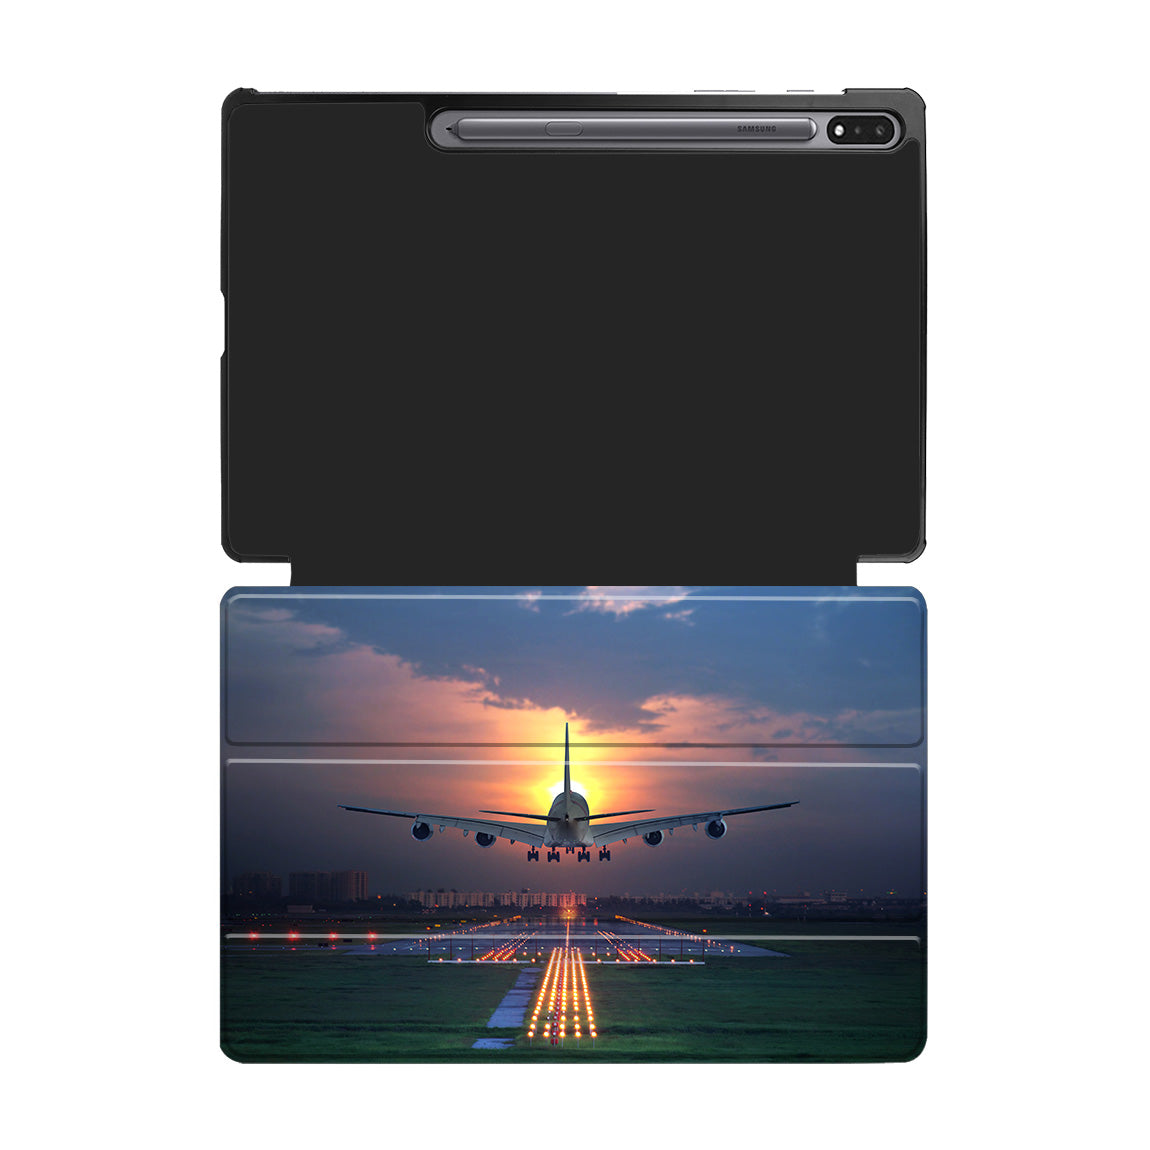 Super Airbus A380 Landing During Sunset Designed Samsung Tablet Cases